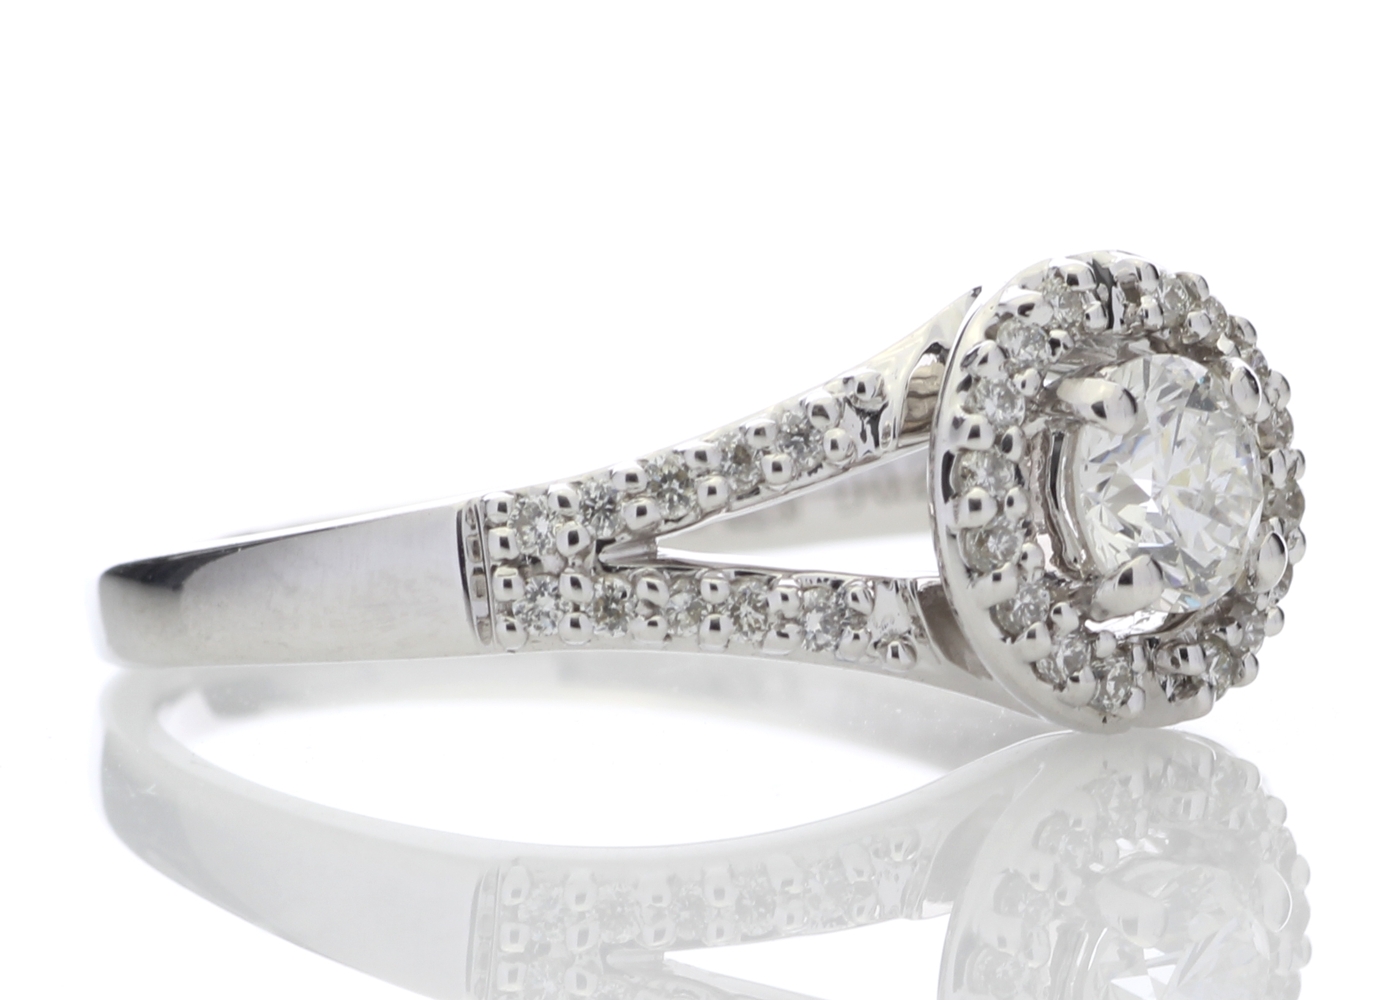 18ct White Gold Halo Set Diamond Ring 0.54 Carats - Image 4 of 4